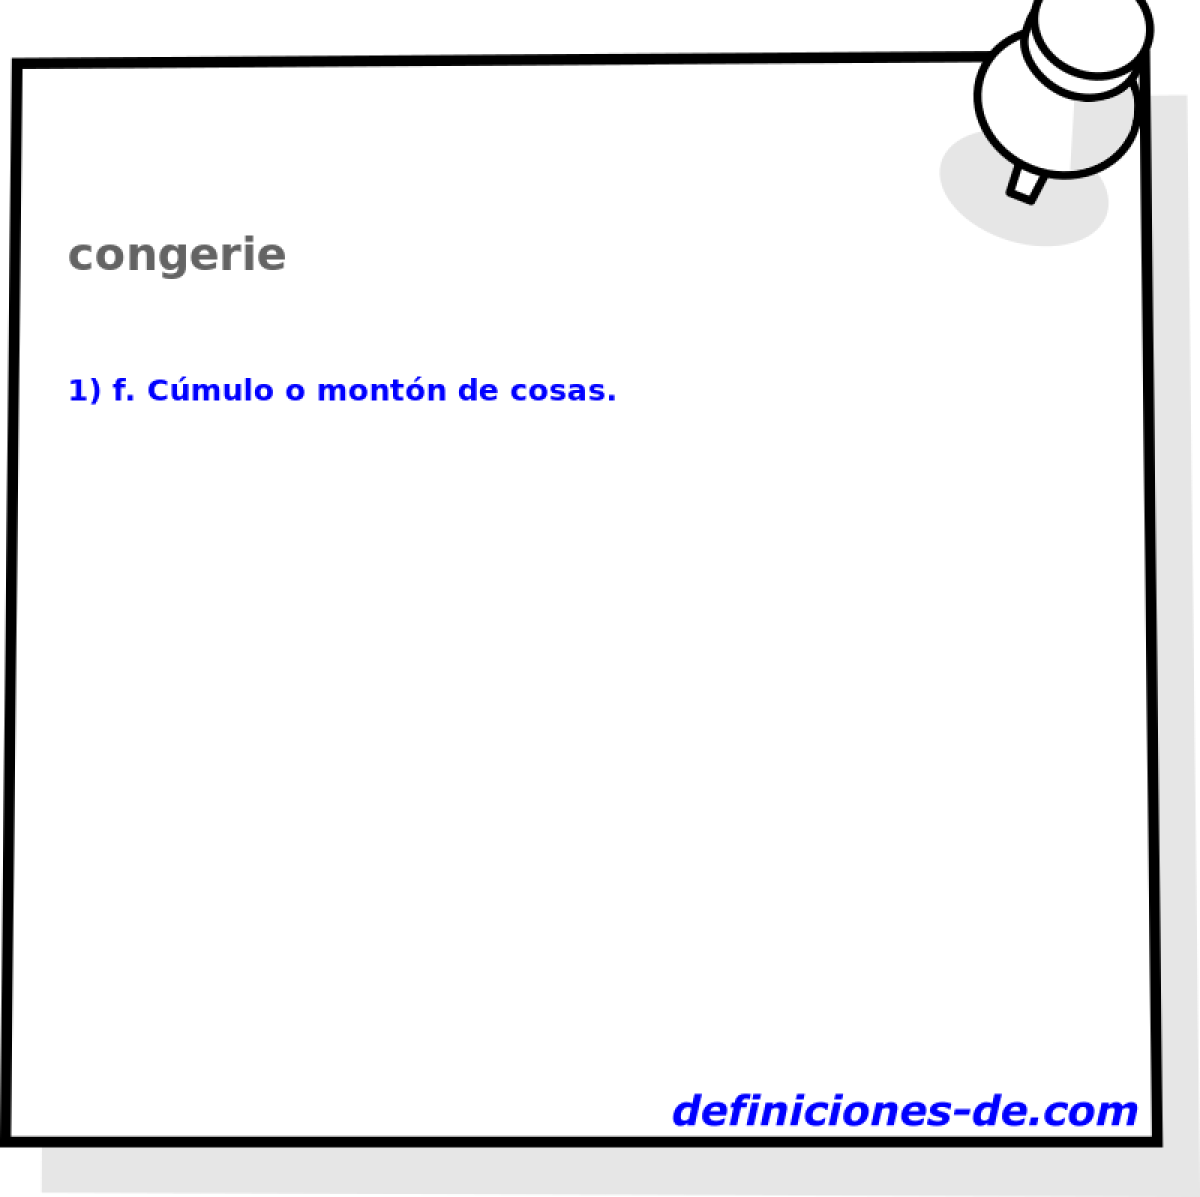 congerie 